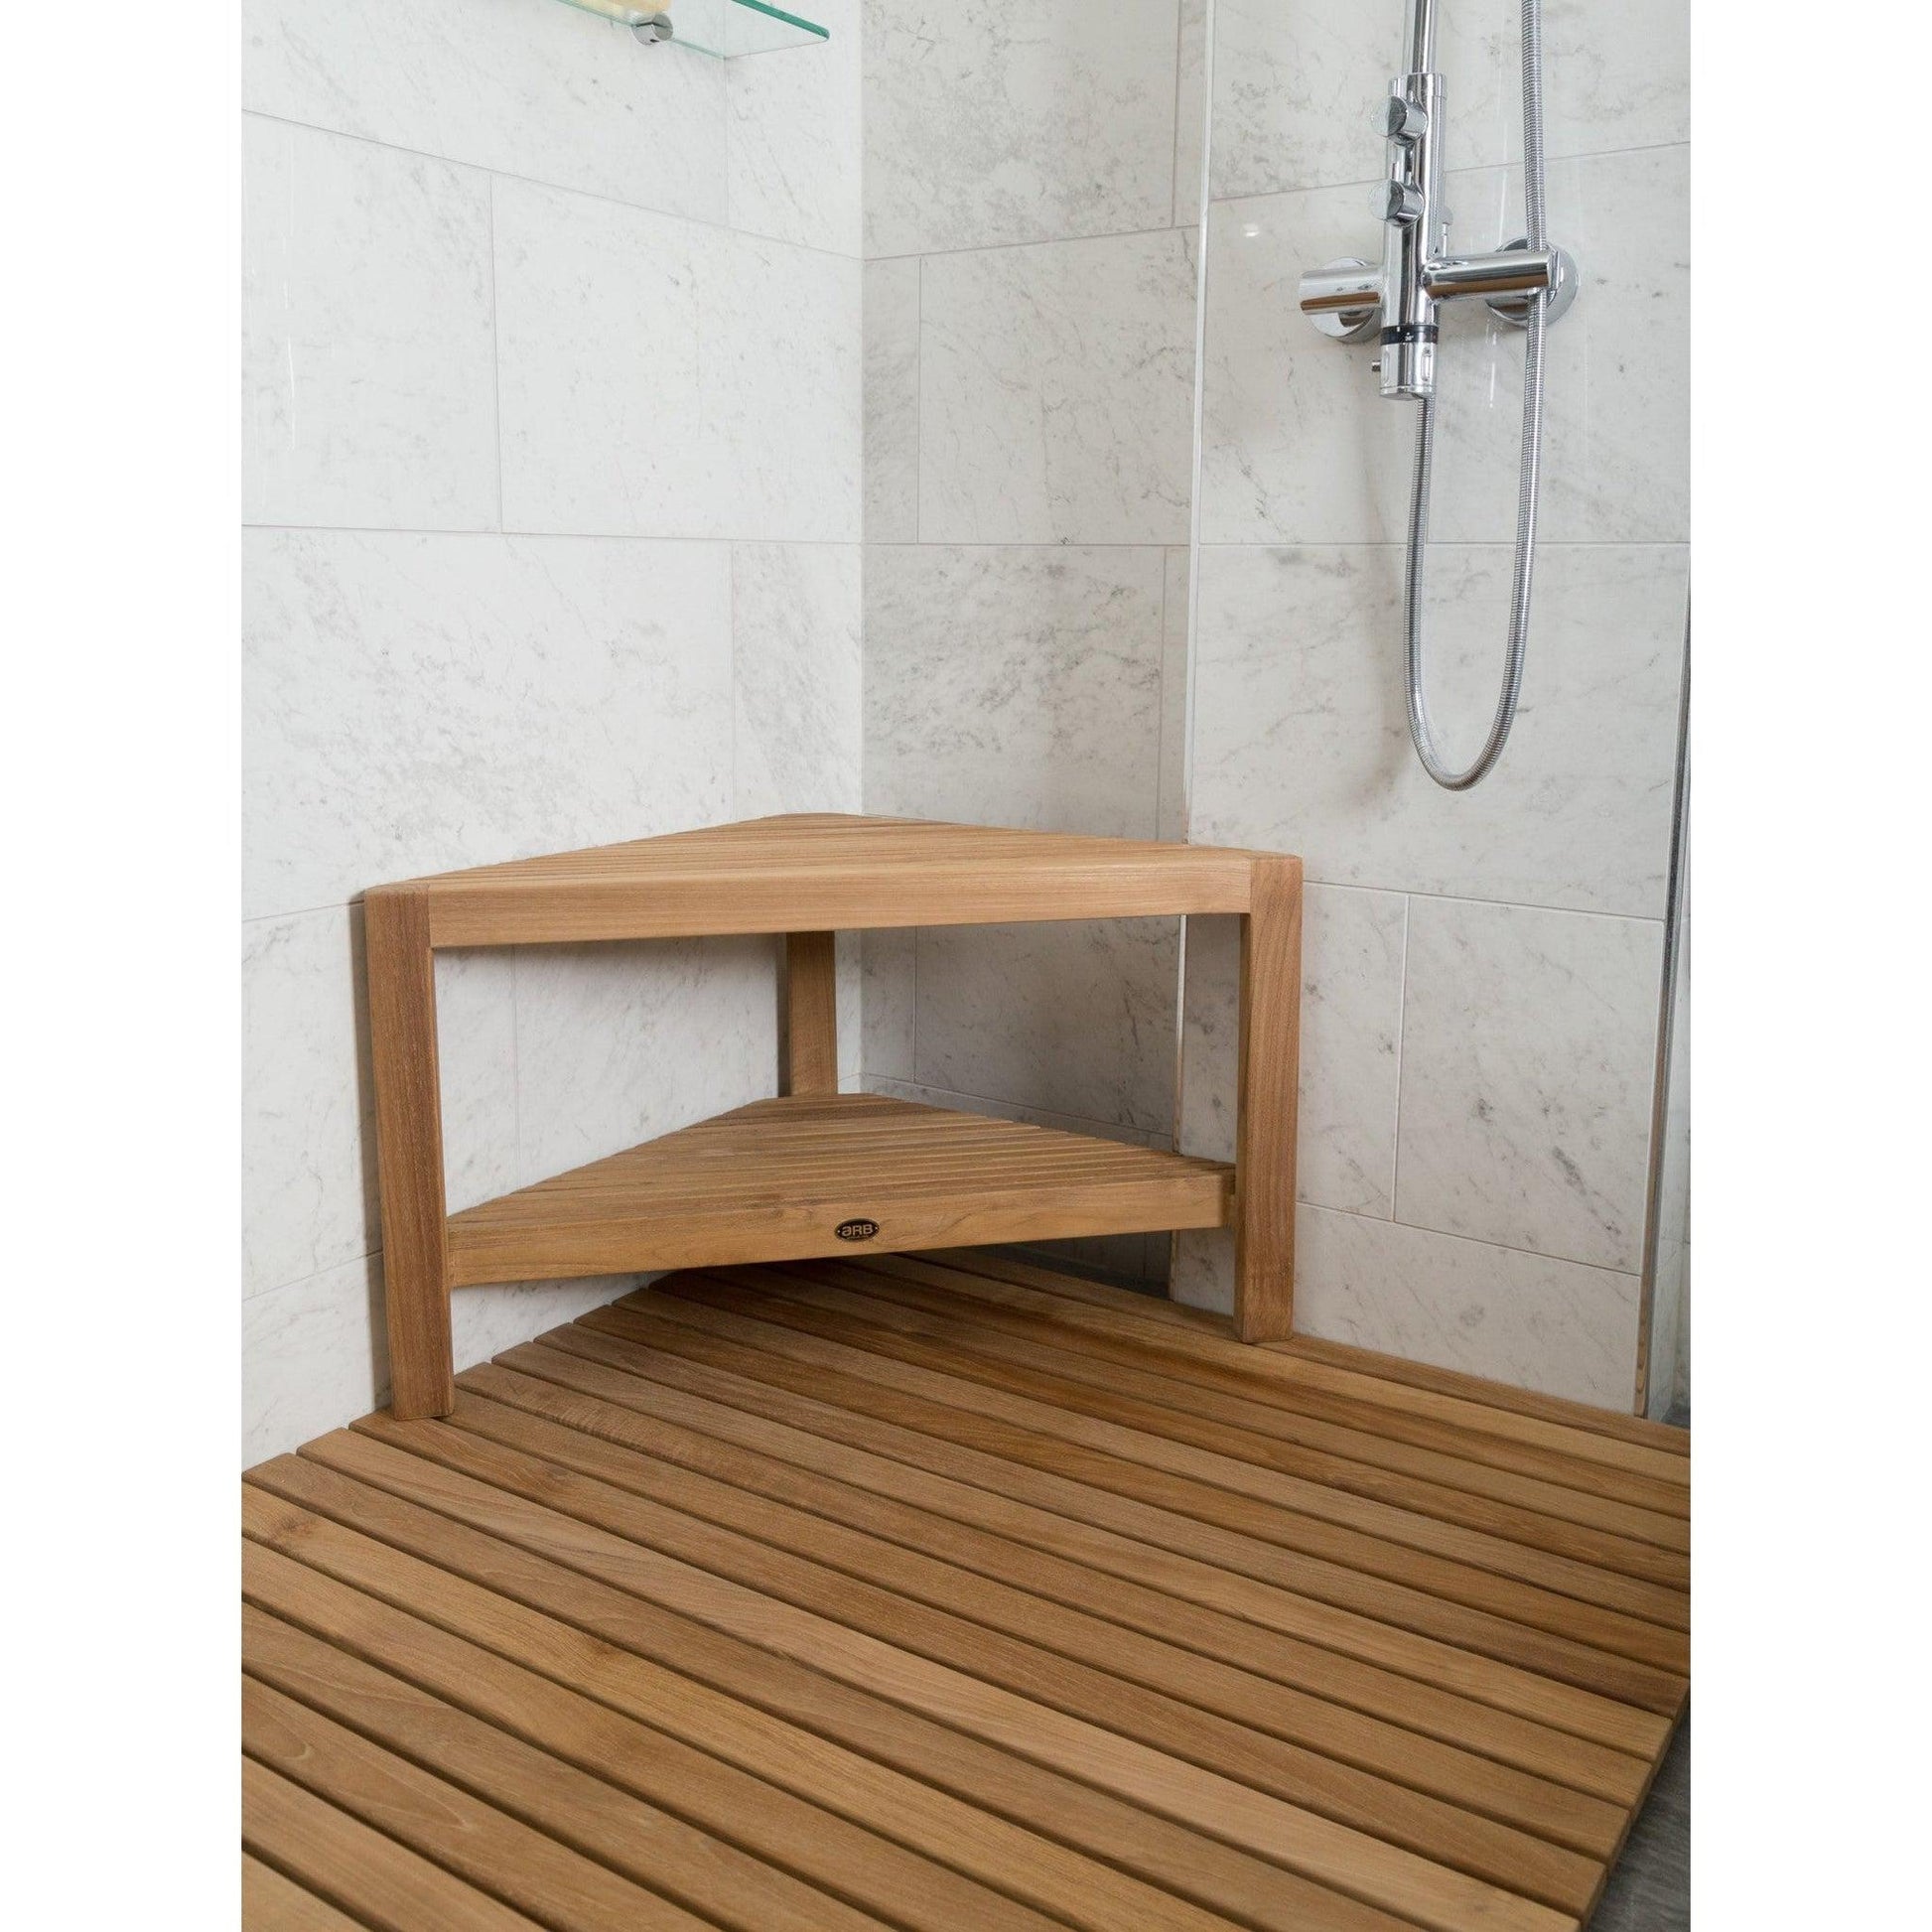 Teak Bath Shelf Corner 45 (115 cm) – ARB Teak & Specialties - USA